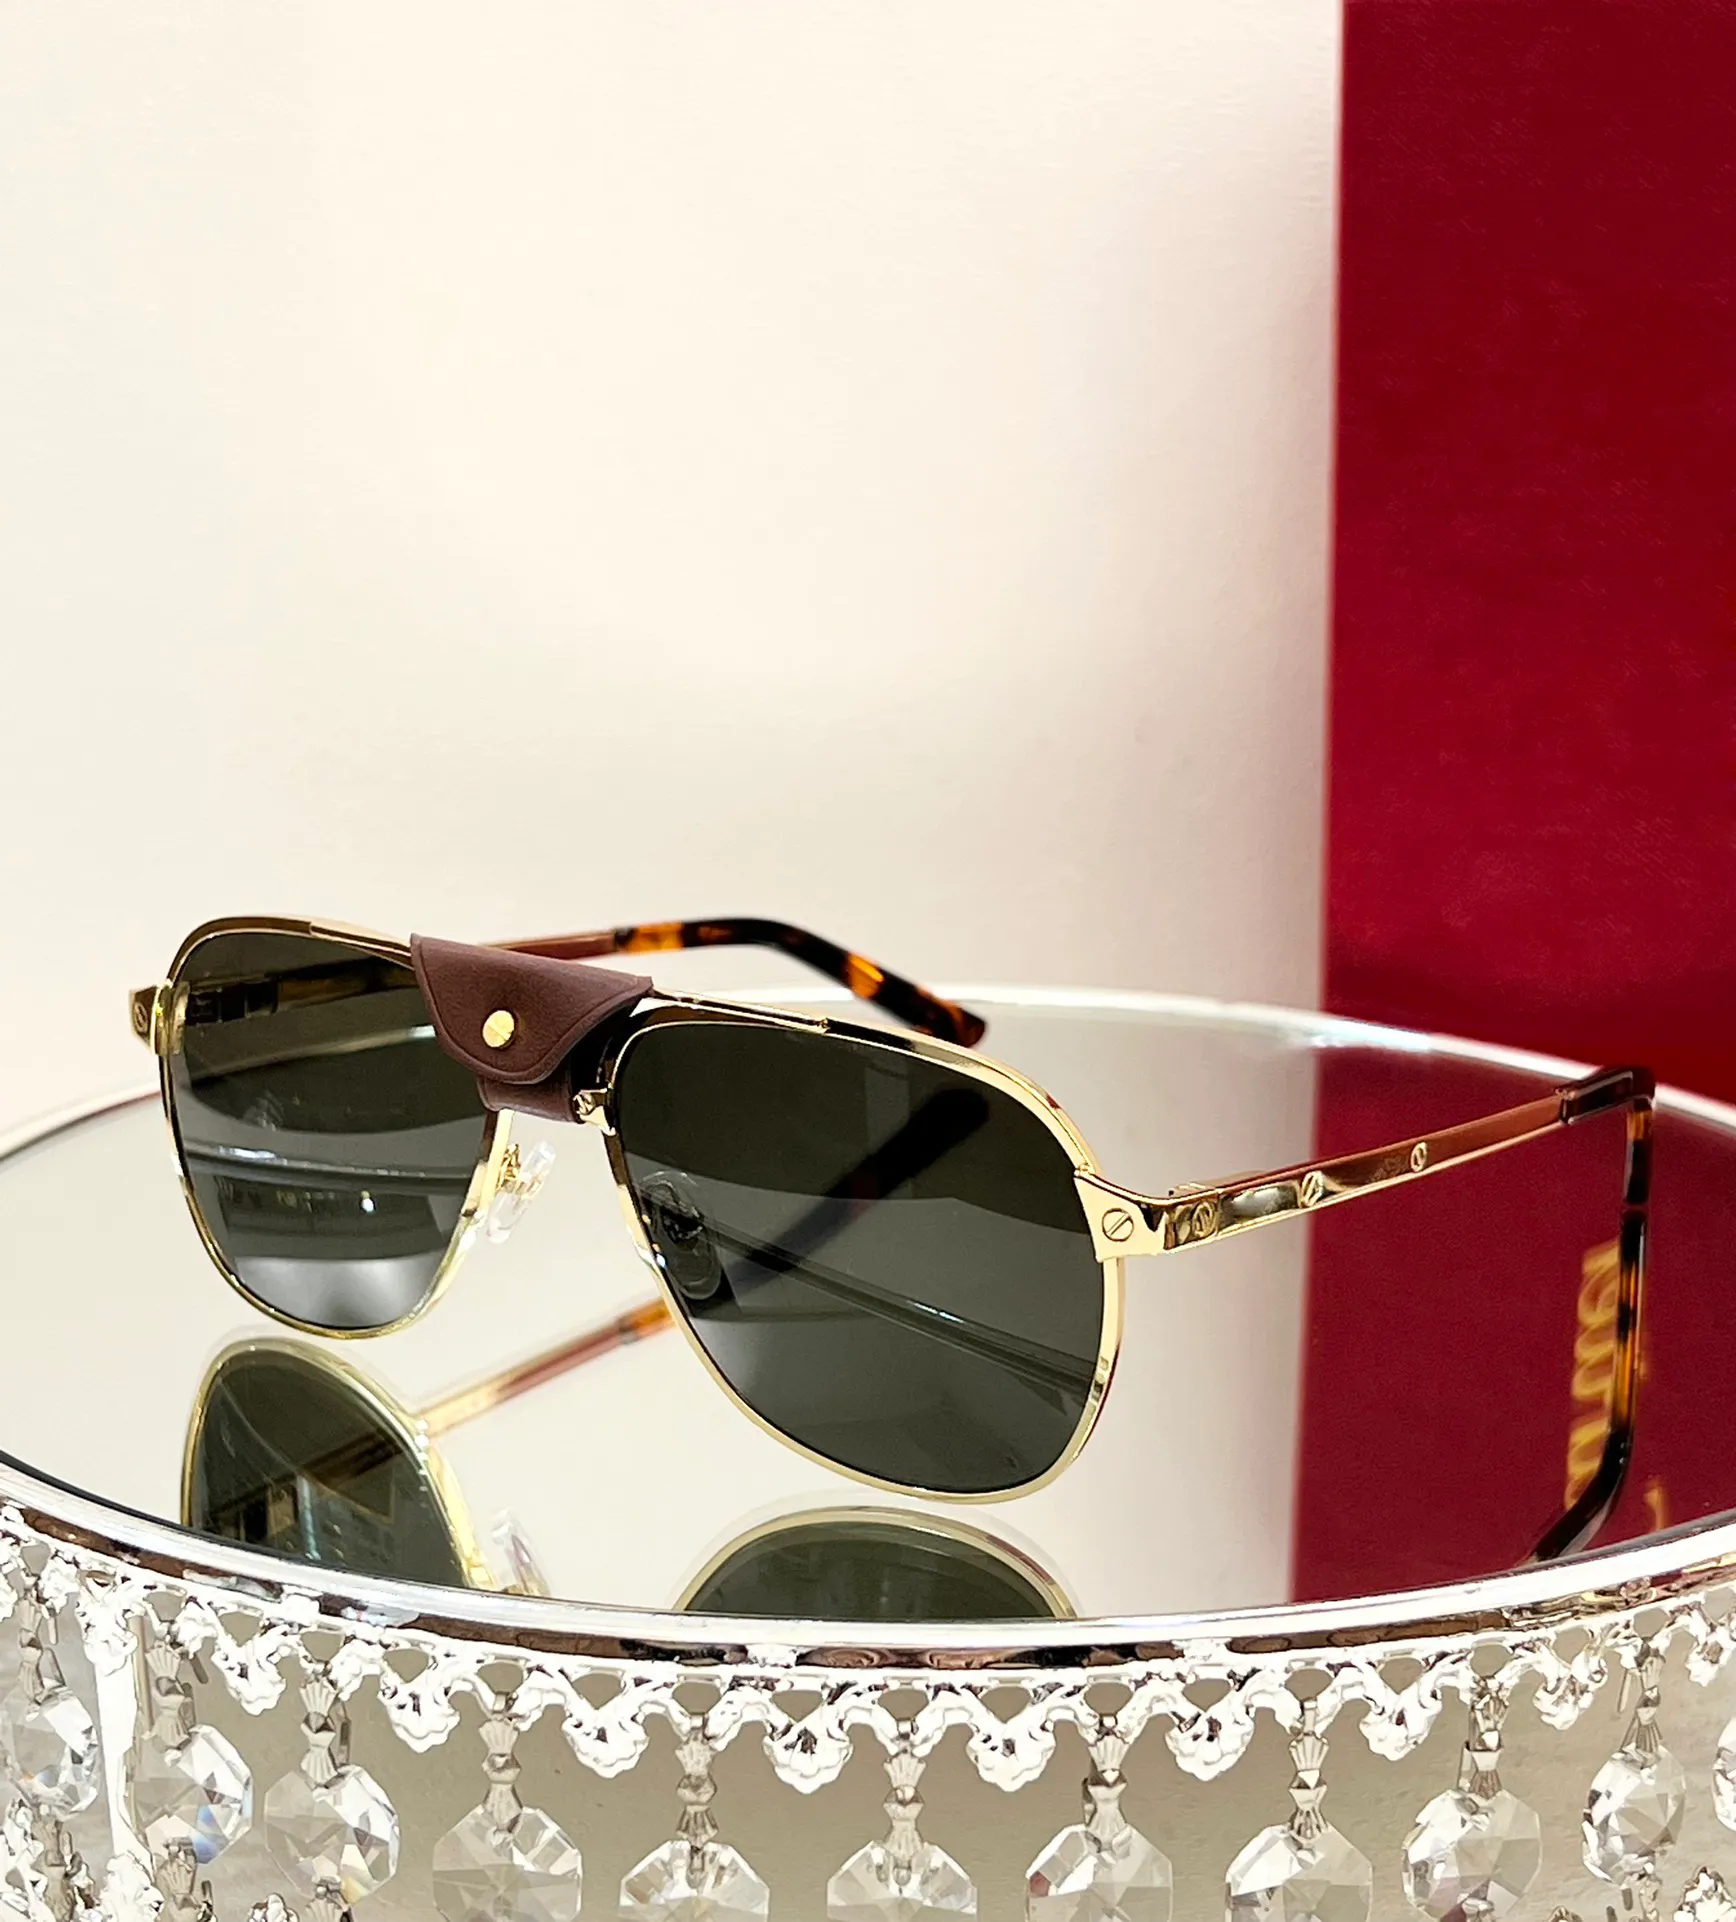 luxury CARTER LUNETTES designer sunglasses men women 0165 famous brand metal frame pilot style popular eyeglasses original quality sun glasses with red case